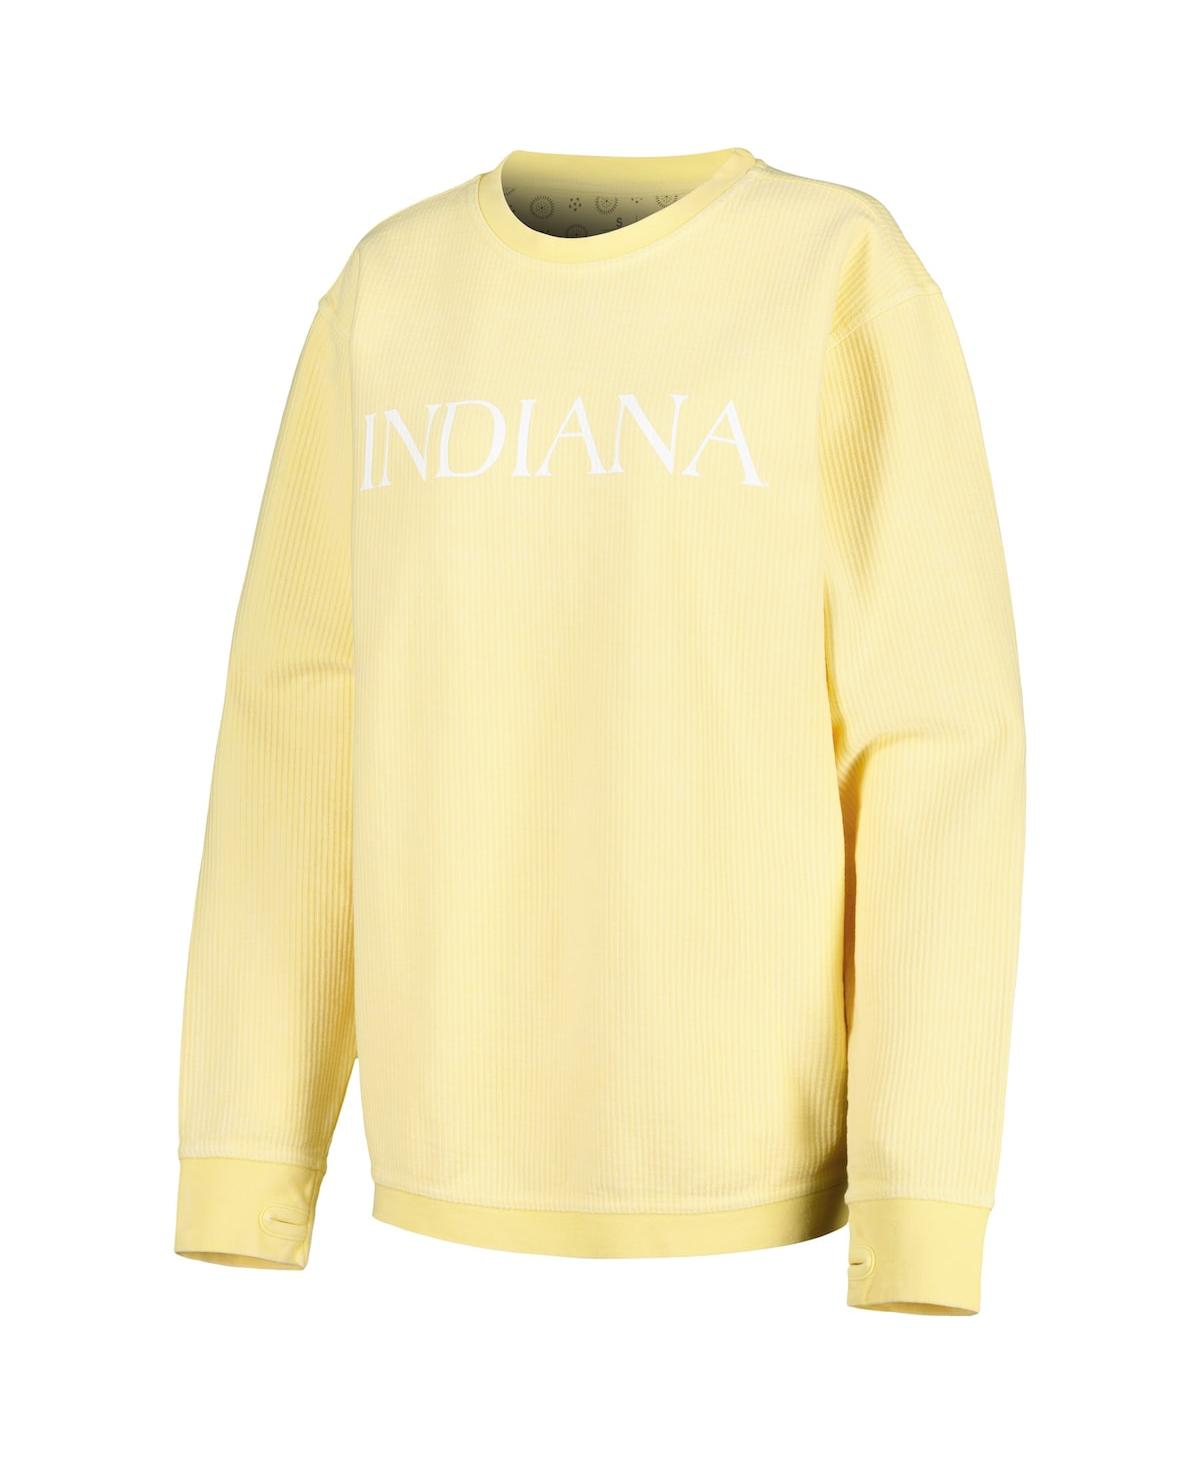 Shop Pressbox Women's  Yellow Distressed Indiana Hoosiers Comfy Cord Bar Print Pullover Sweatshirt